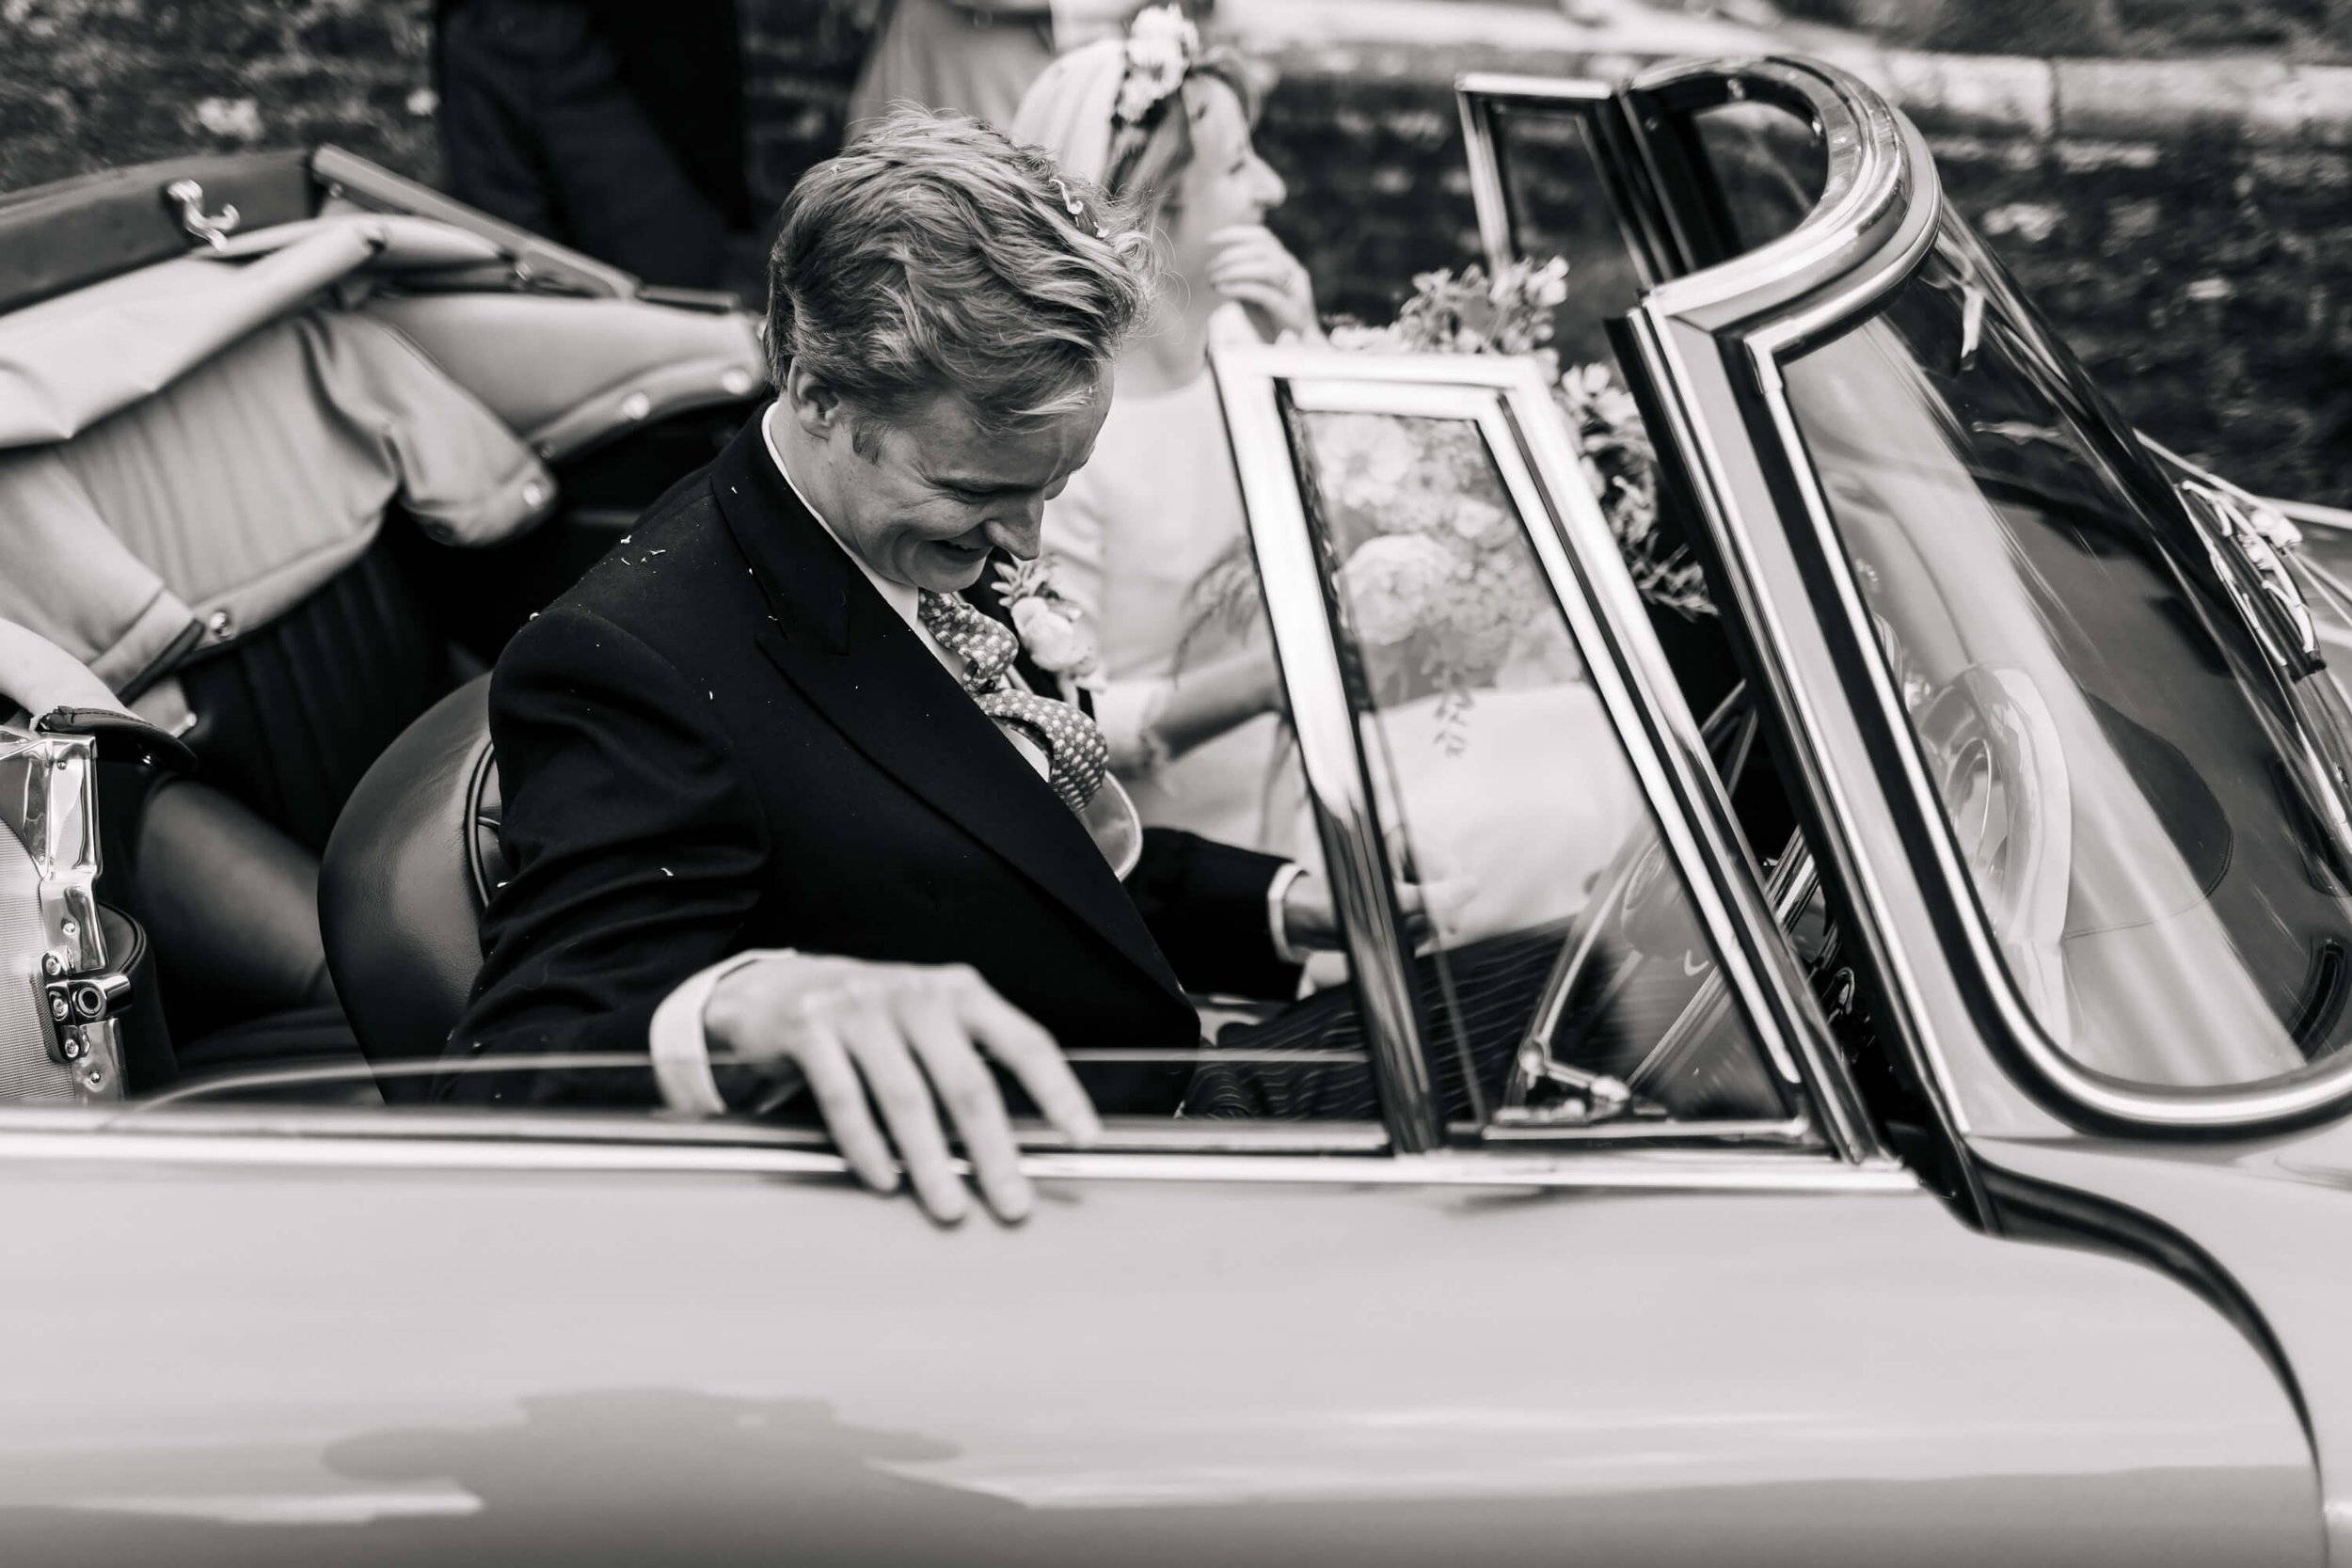 Groom getting into his vintage wedding car